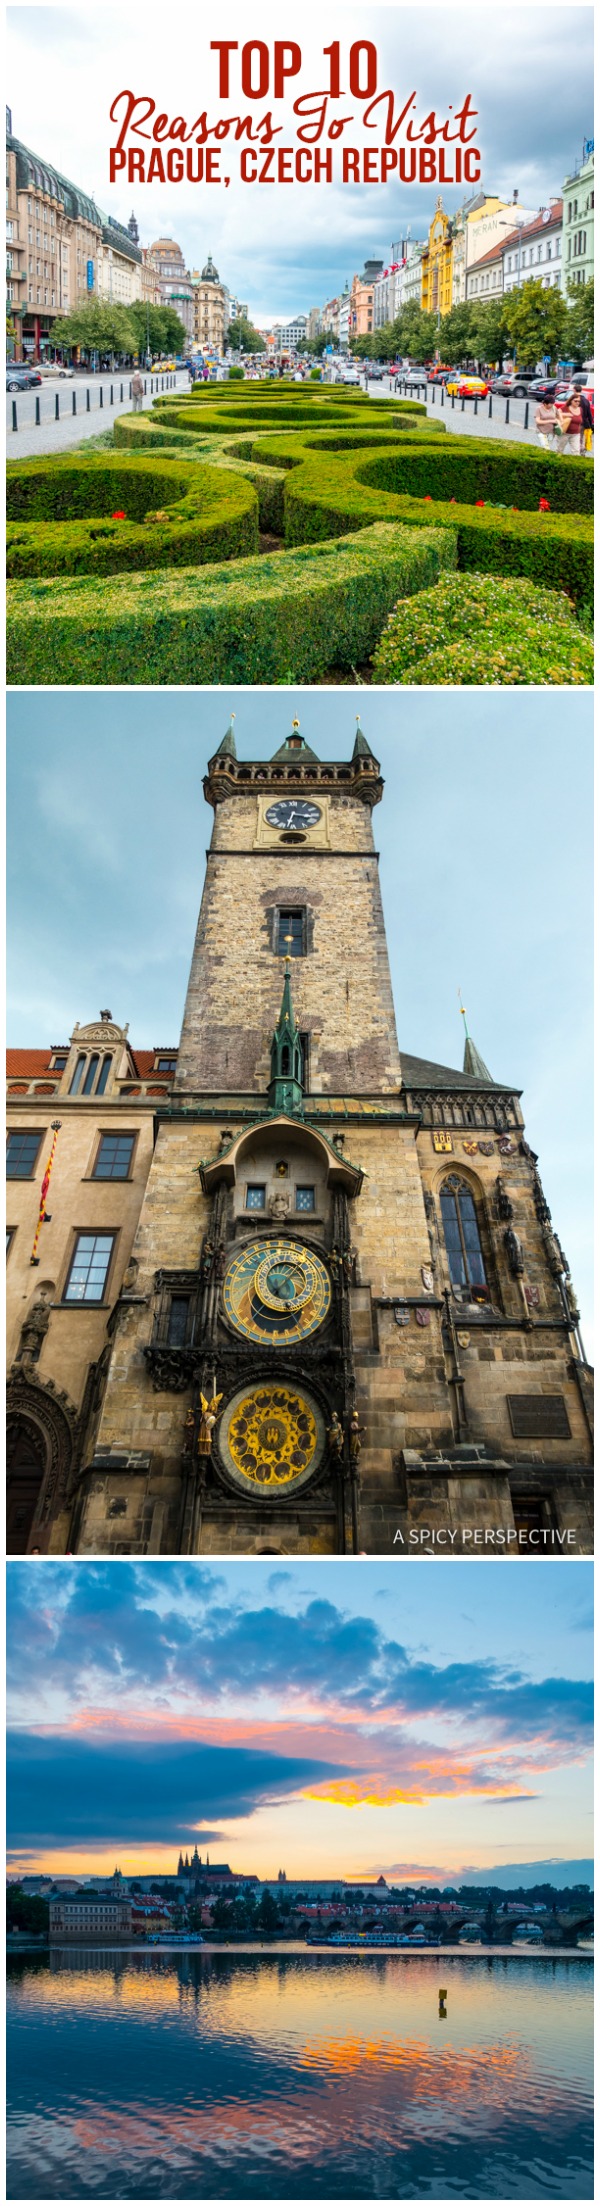 Top 10 Reasons To Visit Prague, Czech Republic #travel #europe